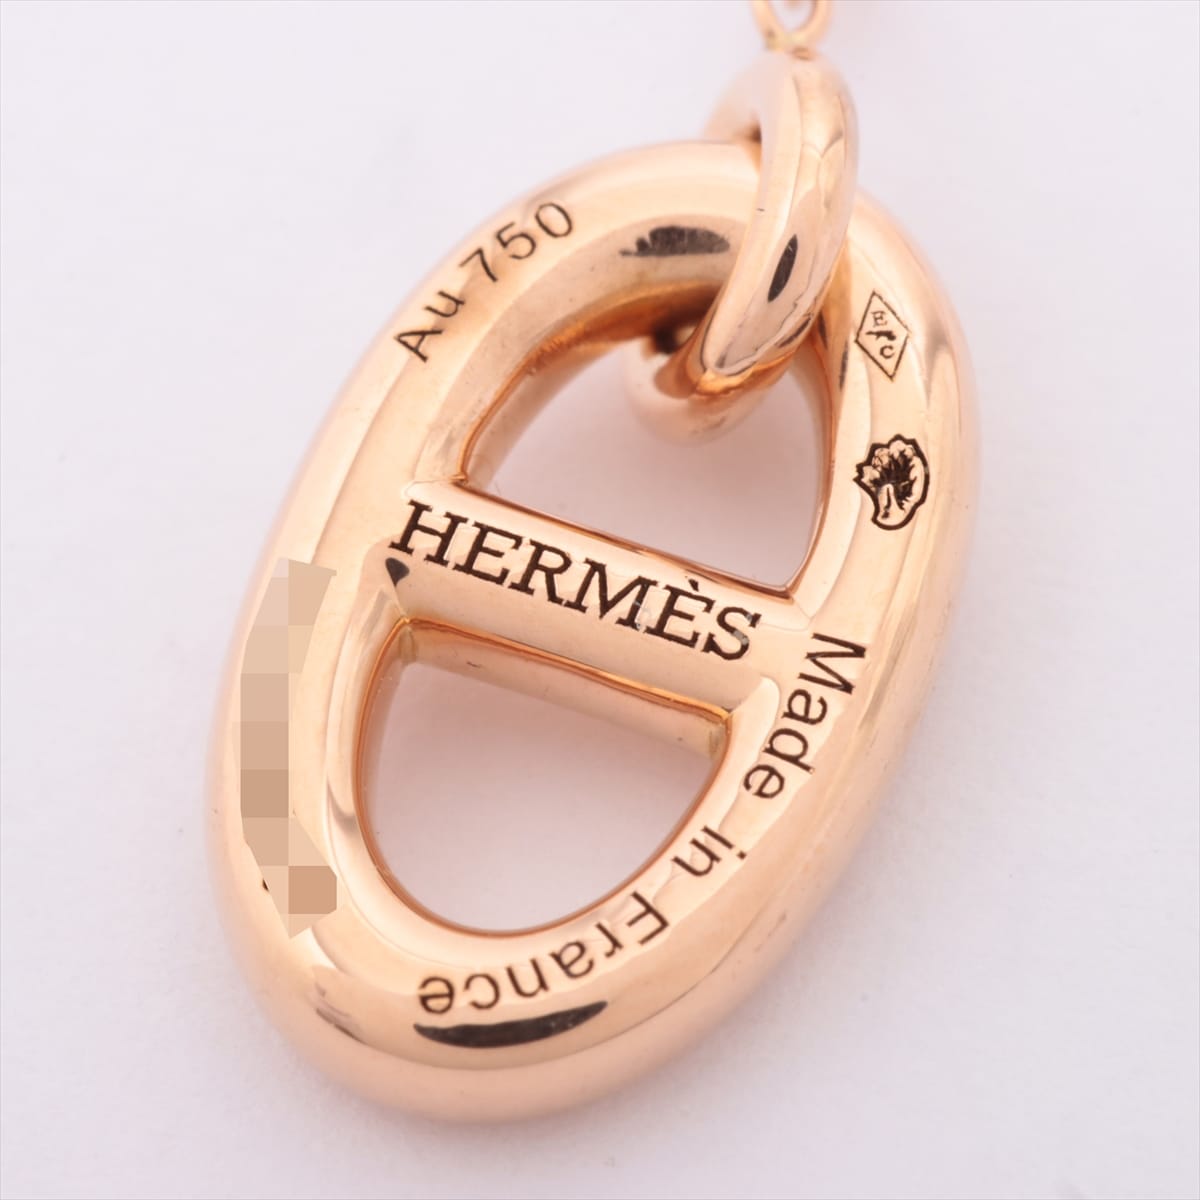 Hermès Chaîne d'Ancre Farandole Piercing jewelry 750(PG) 6.5g